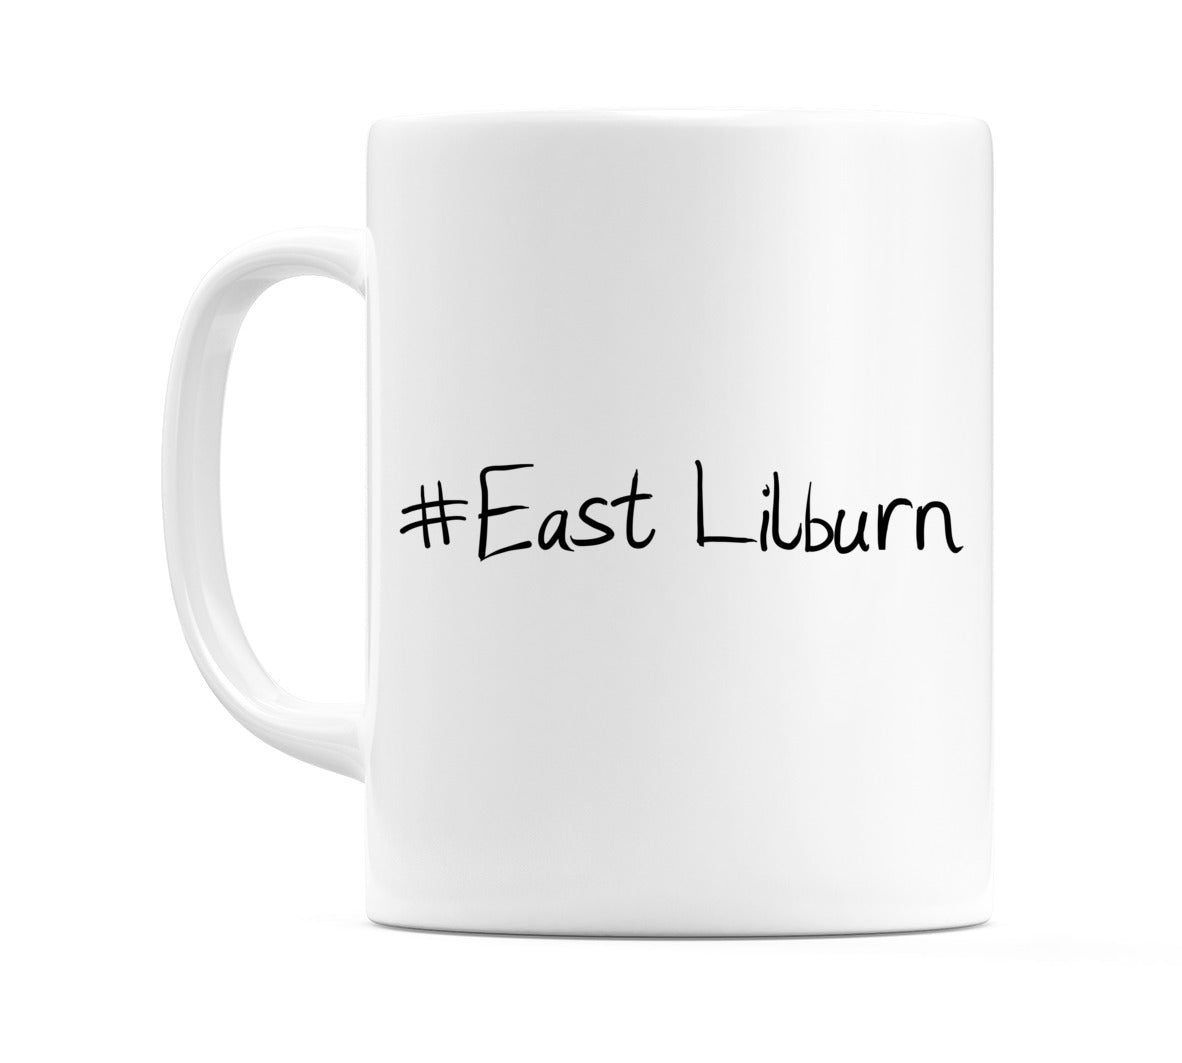 #East Lilburn Mug